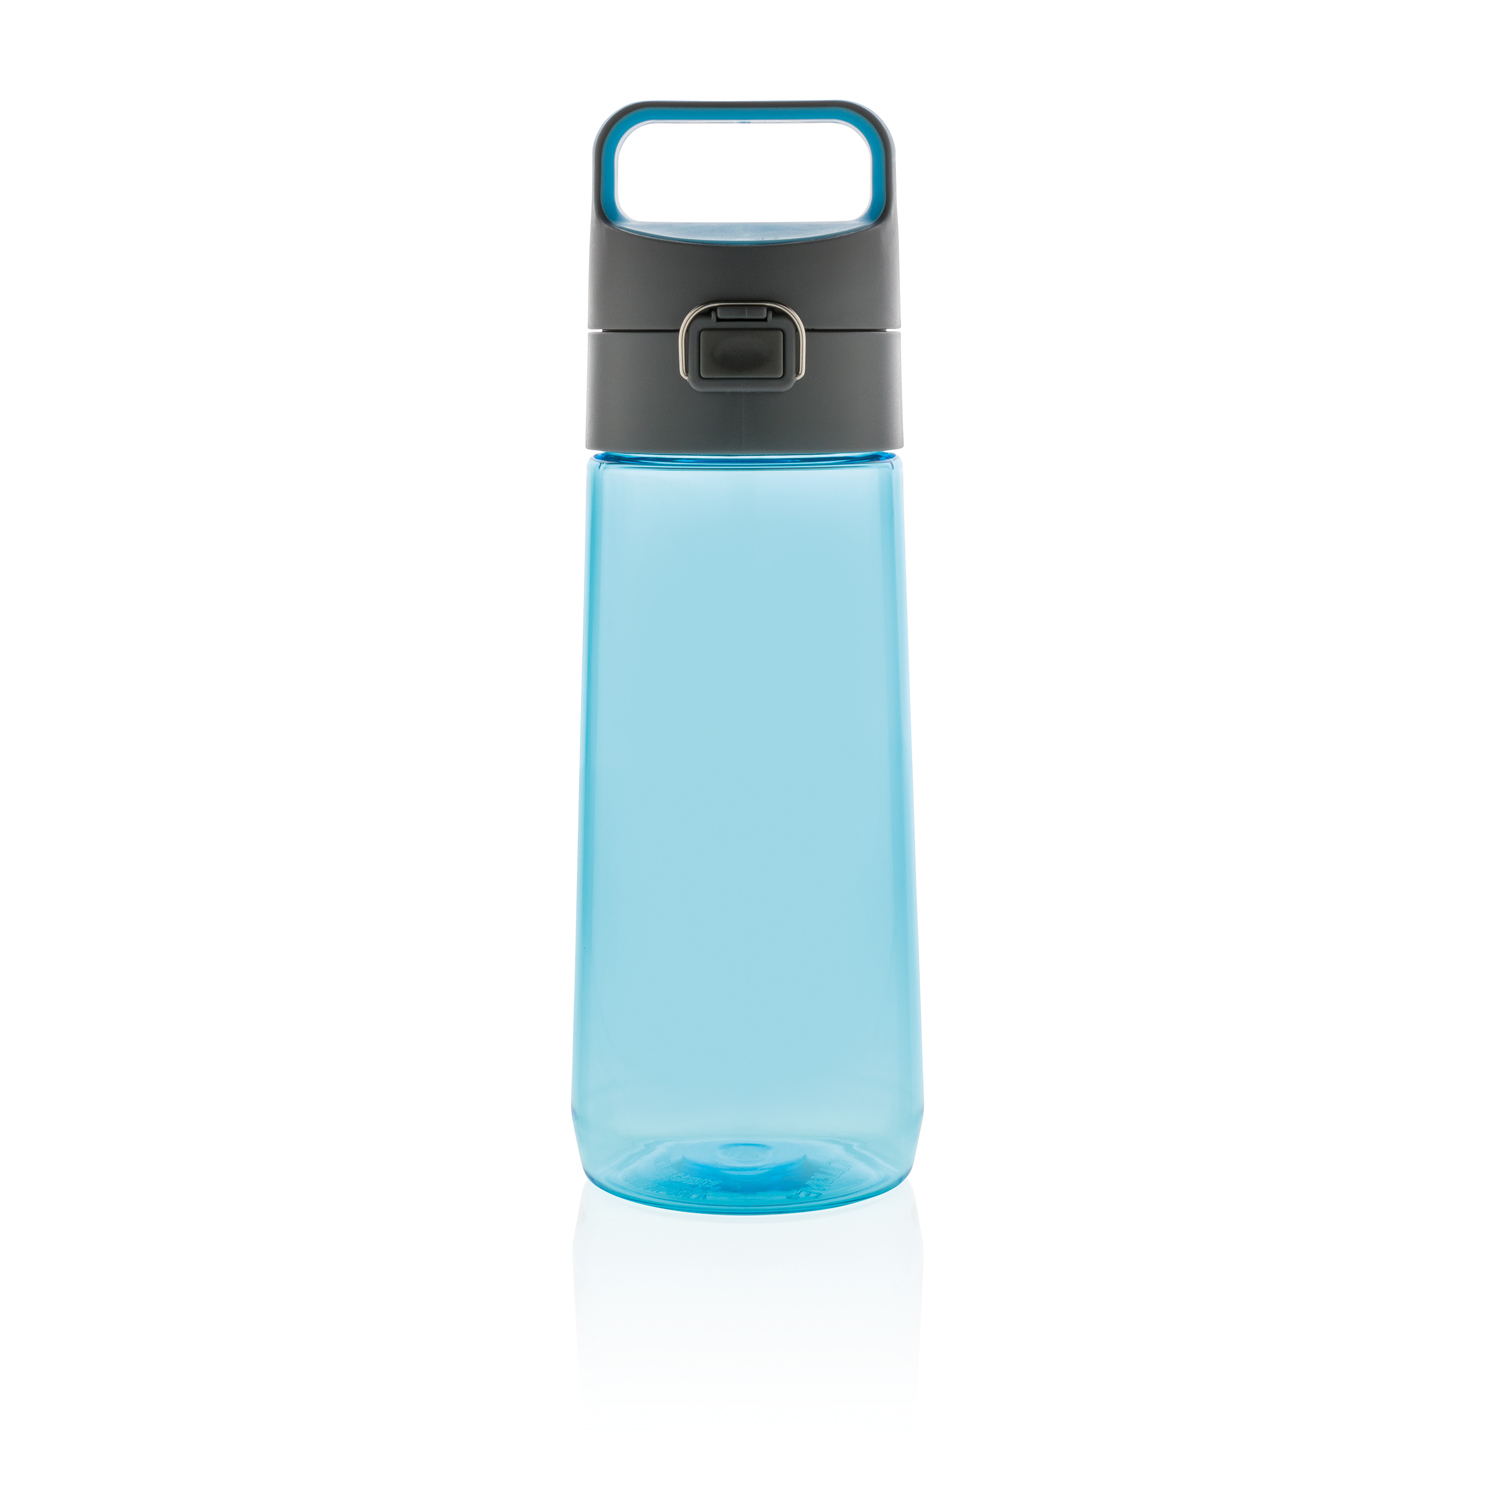 Герметичная бутылка для воды Hydrate, синий